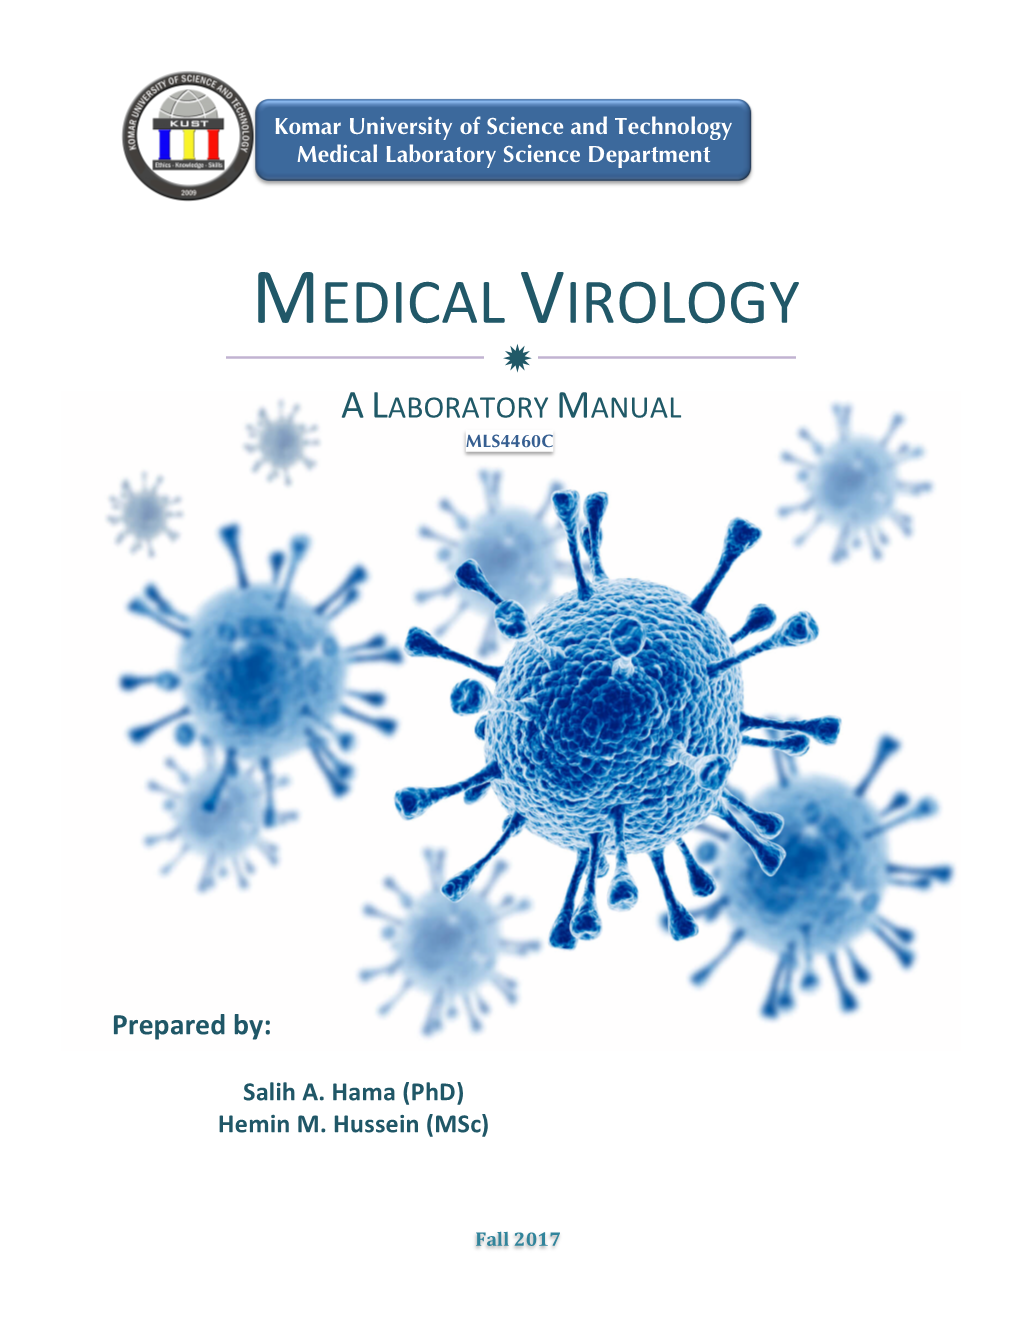 Medical Virology Ð a Laboratory Manual Mls4460c